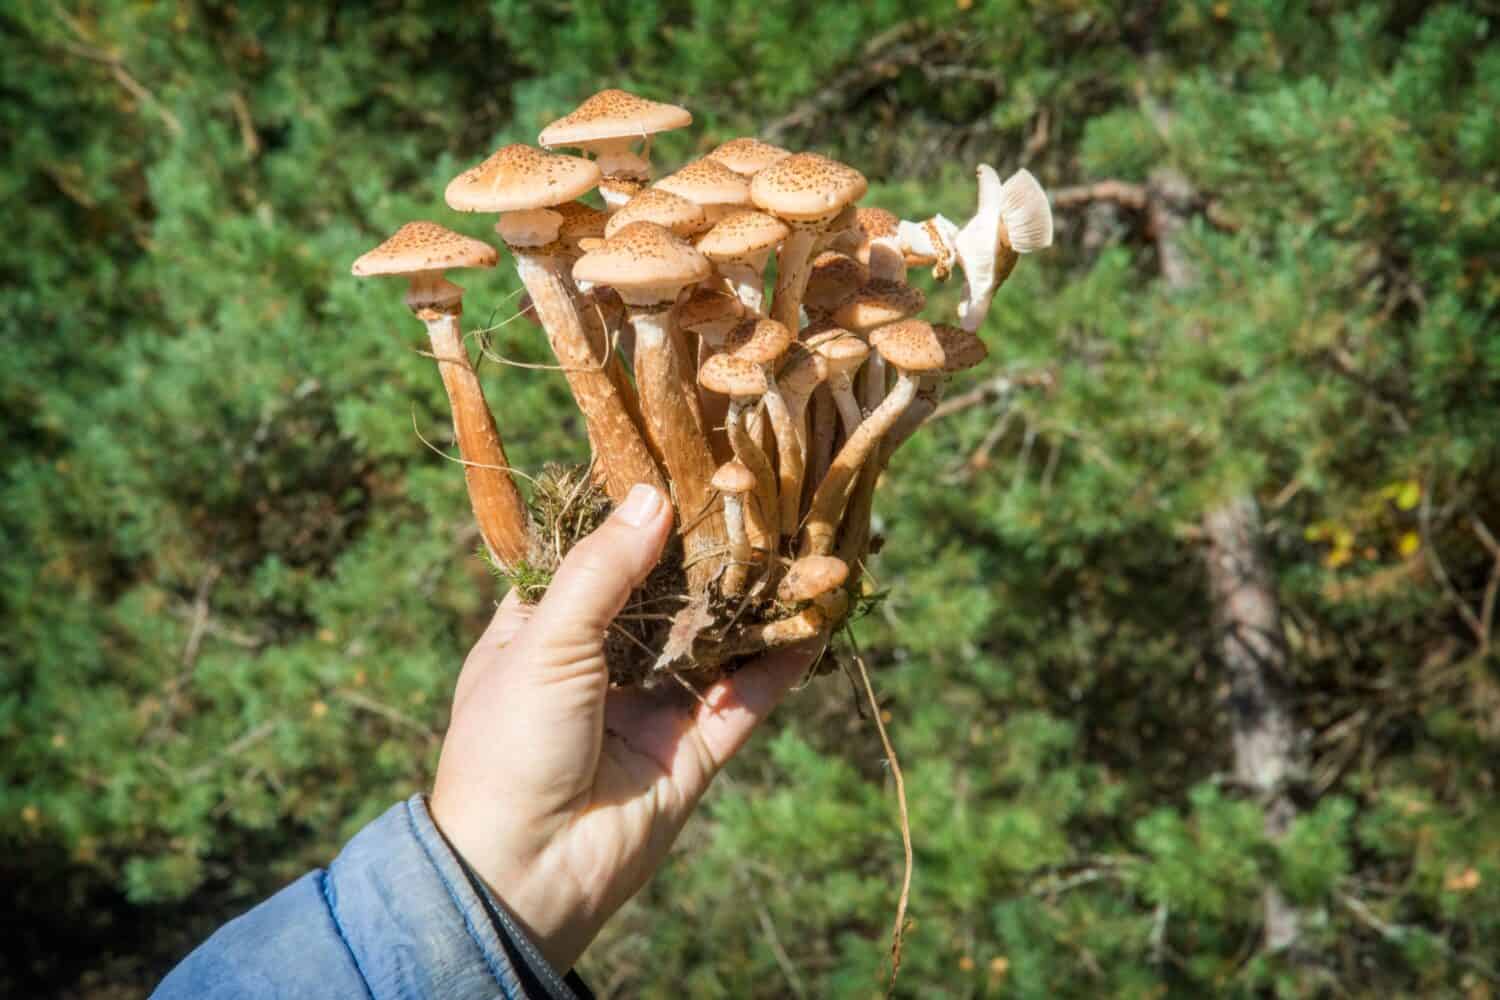 Autumn mushrooms. Picking mushrooms in the wild forest. Honey mushrooms In the hand of a mushroom picker. A family of honey agarics. Close-up horizontal photography.